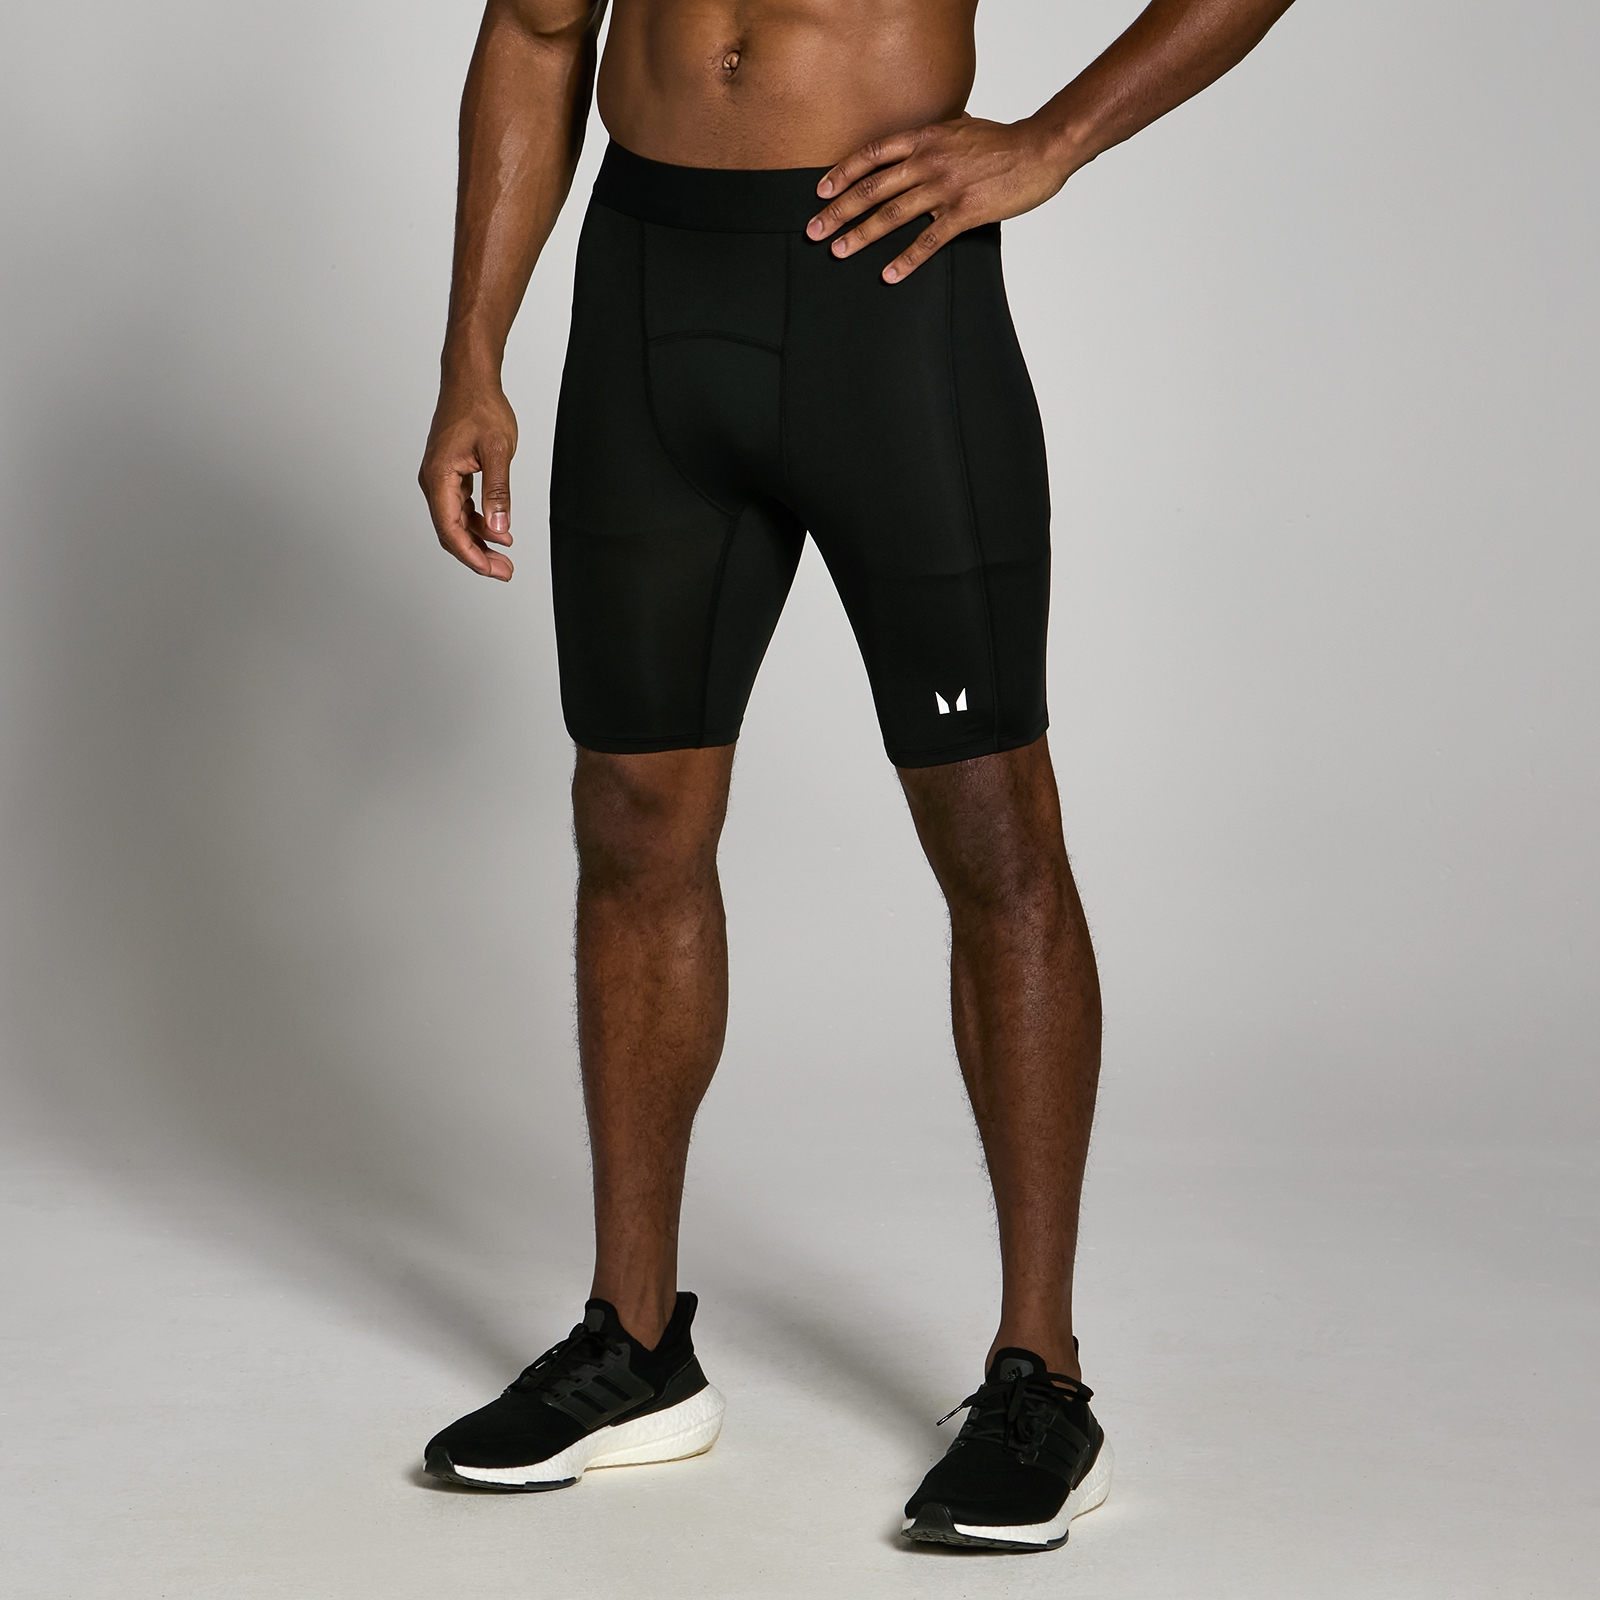 MP Men's Training Base Layer Shorts - Black - S